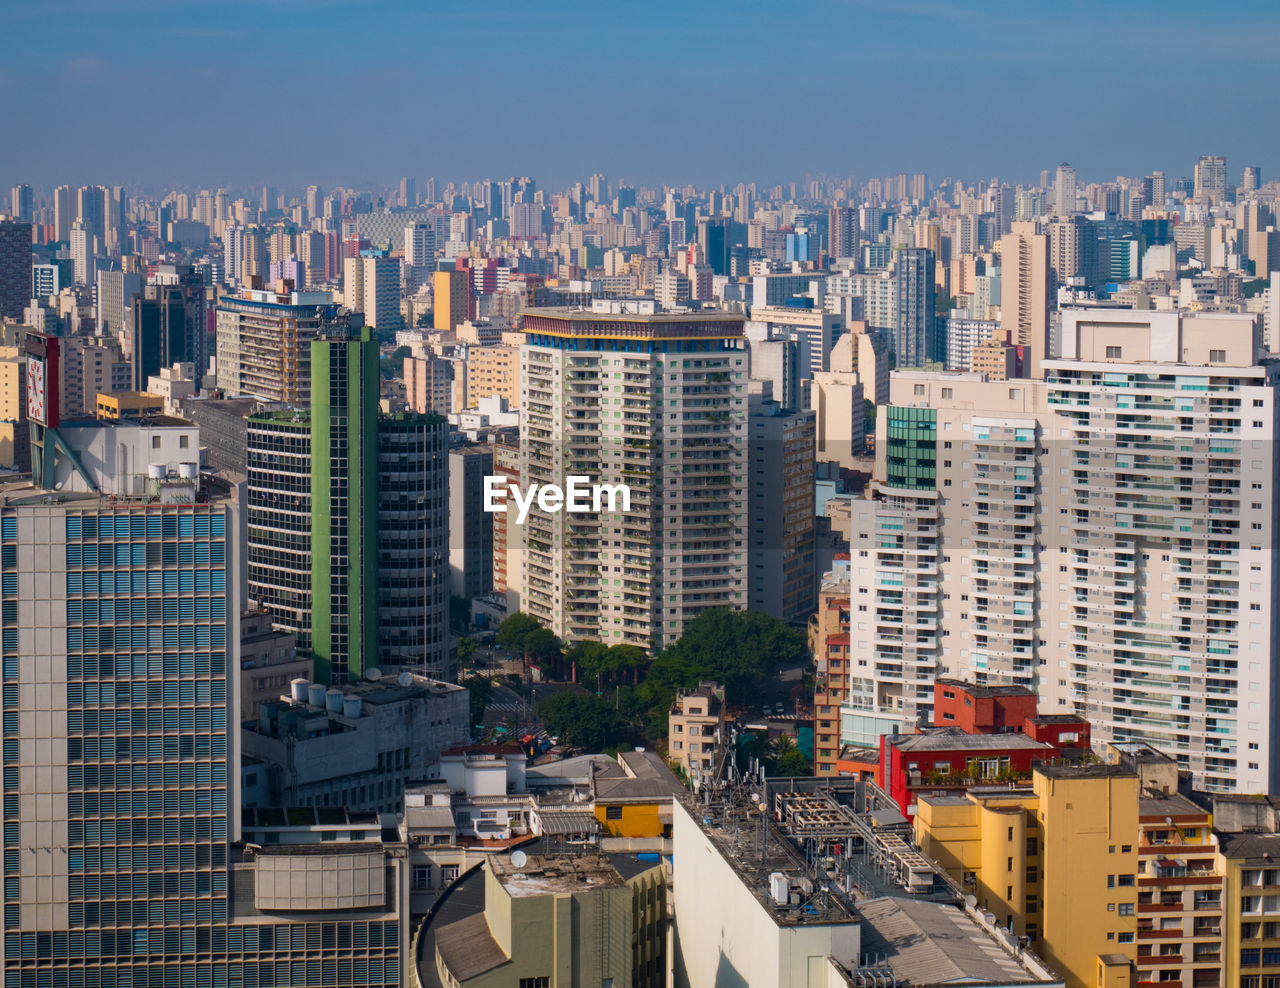 Panoramic view of sao paulo city downtown.